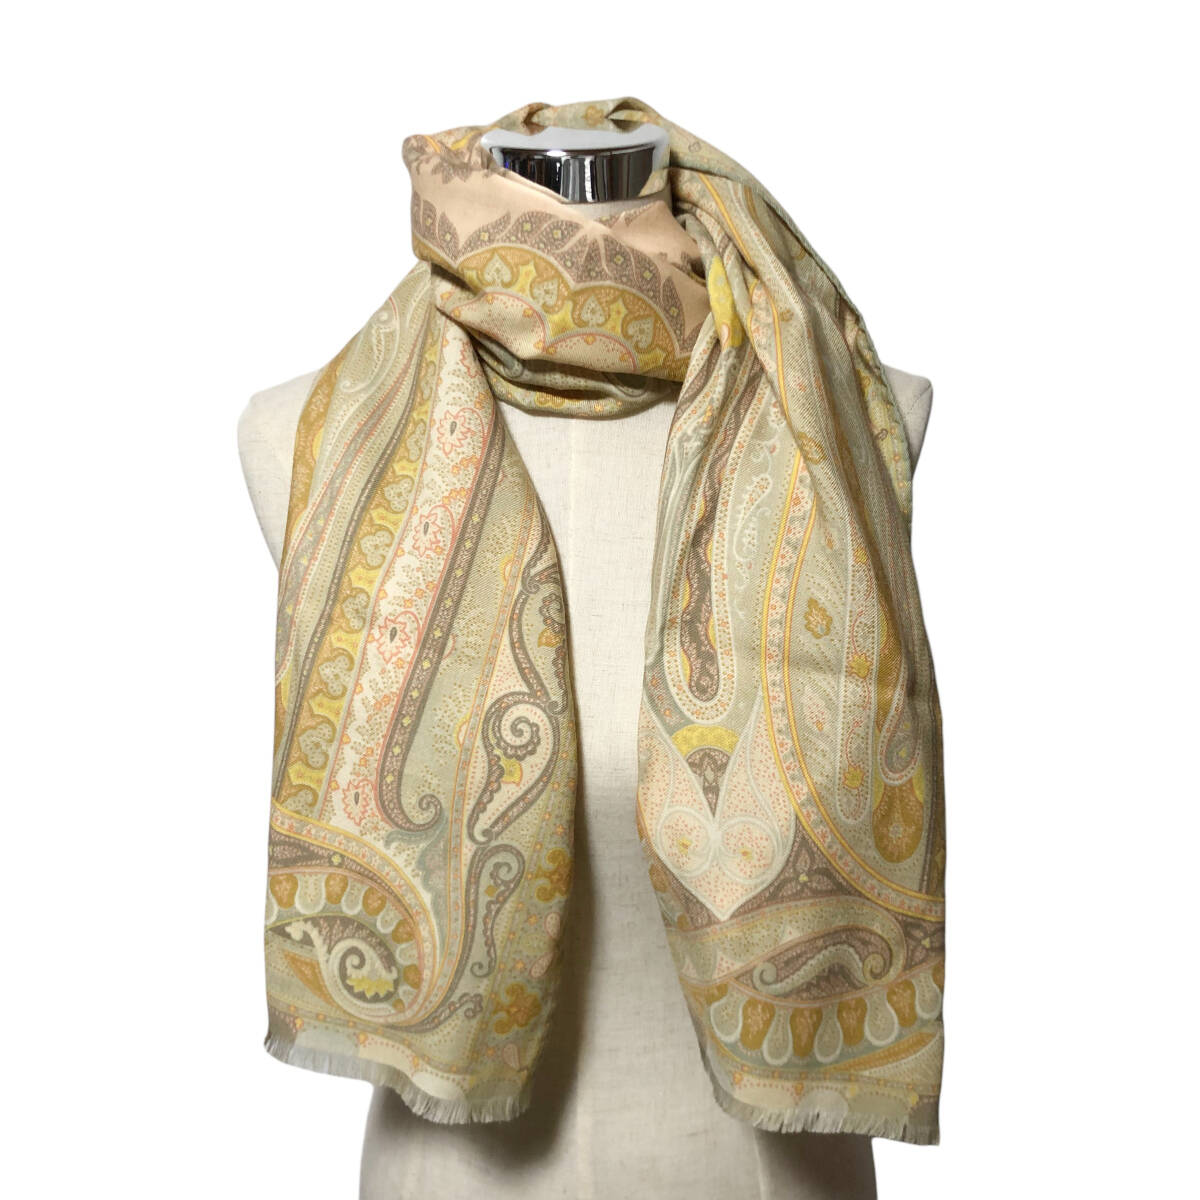 ETRO Etro large size shawl stole scarf peiz Lee pattern wool silk beige group Italy made ST1